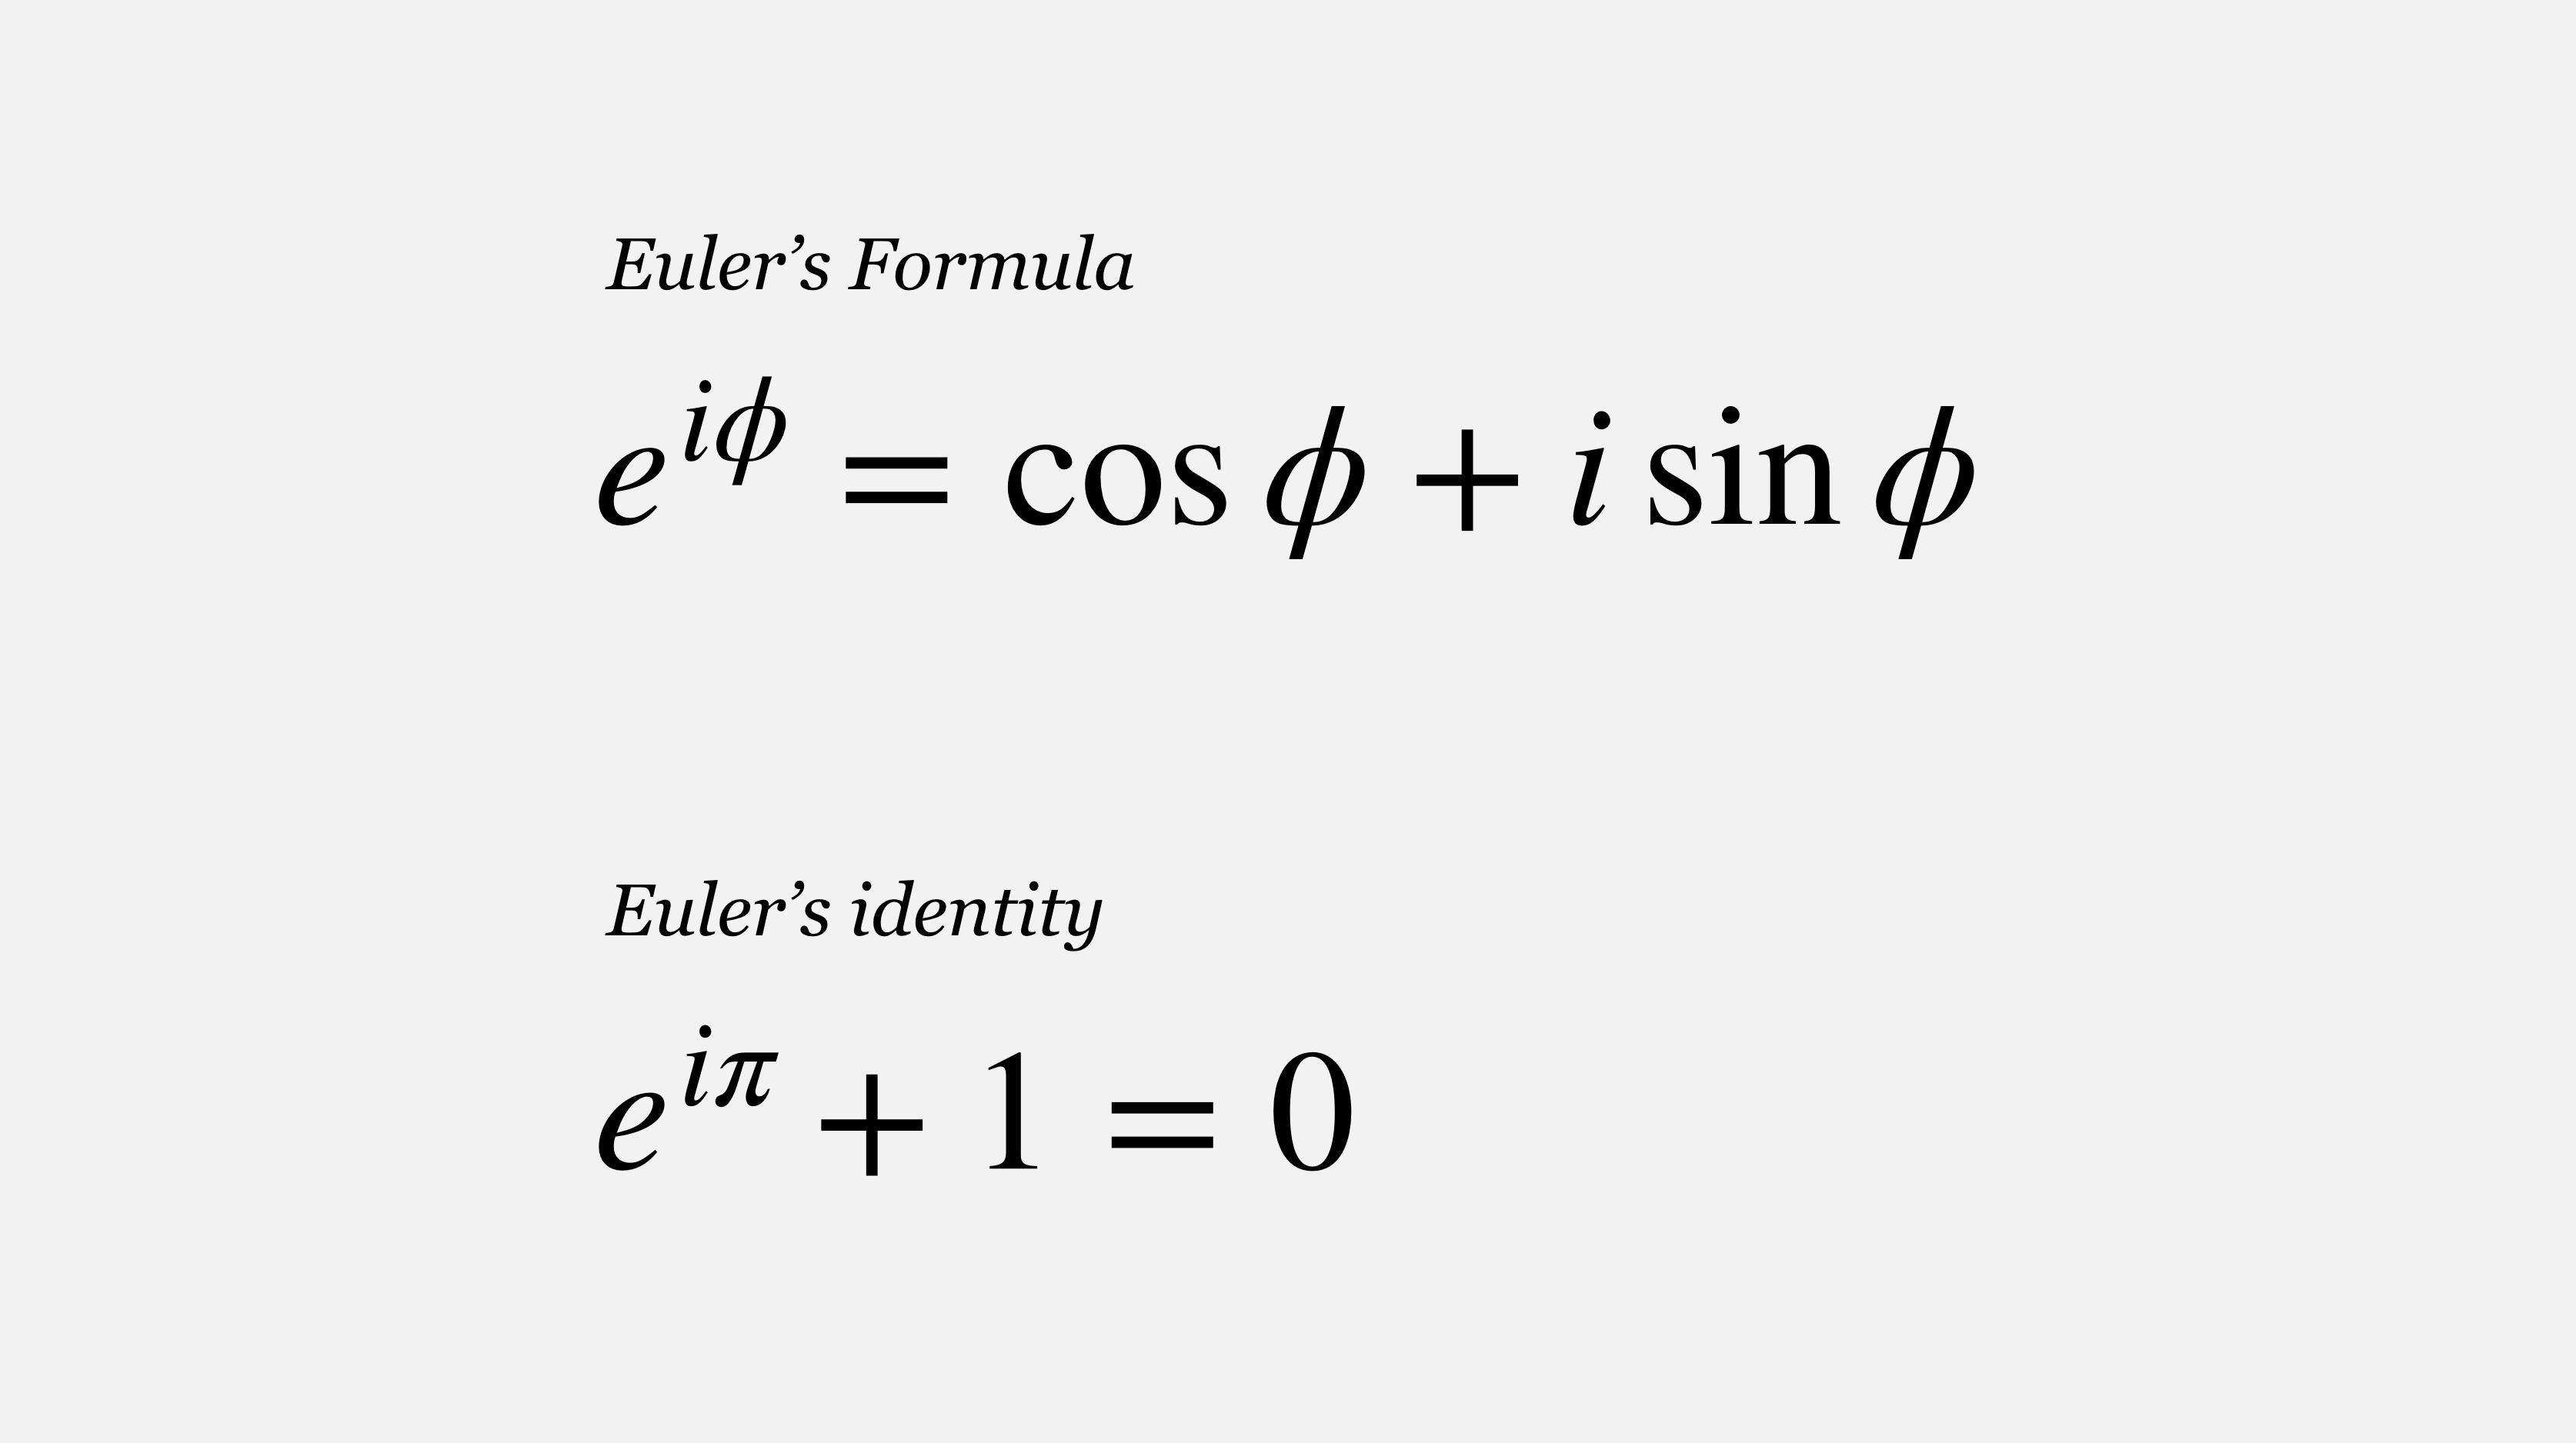 deriving-the-famous-euler-s-formula-through-taylor-series-muthukrishnan